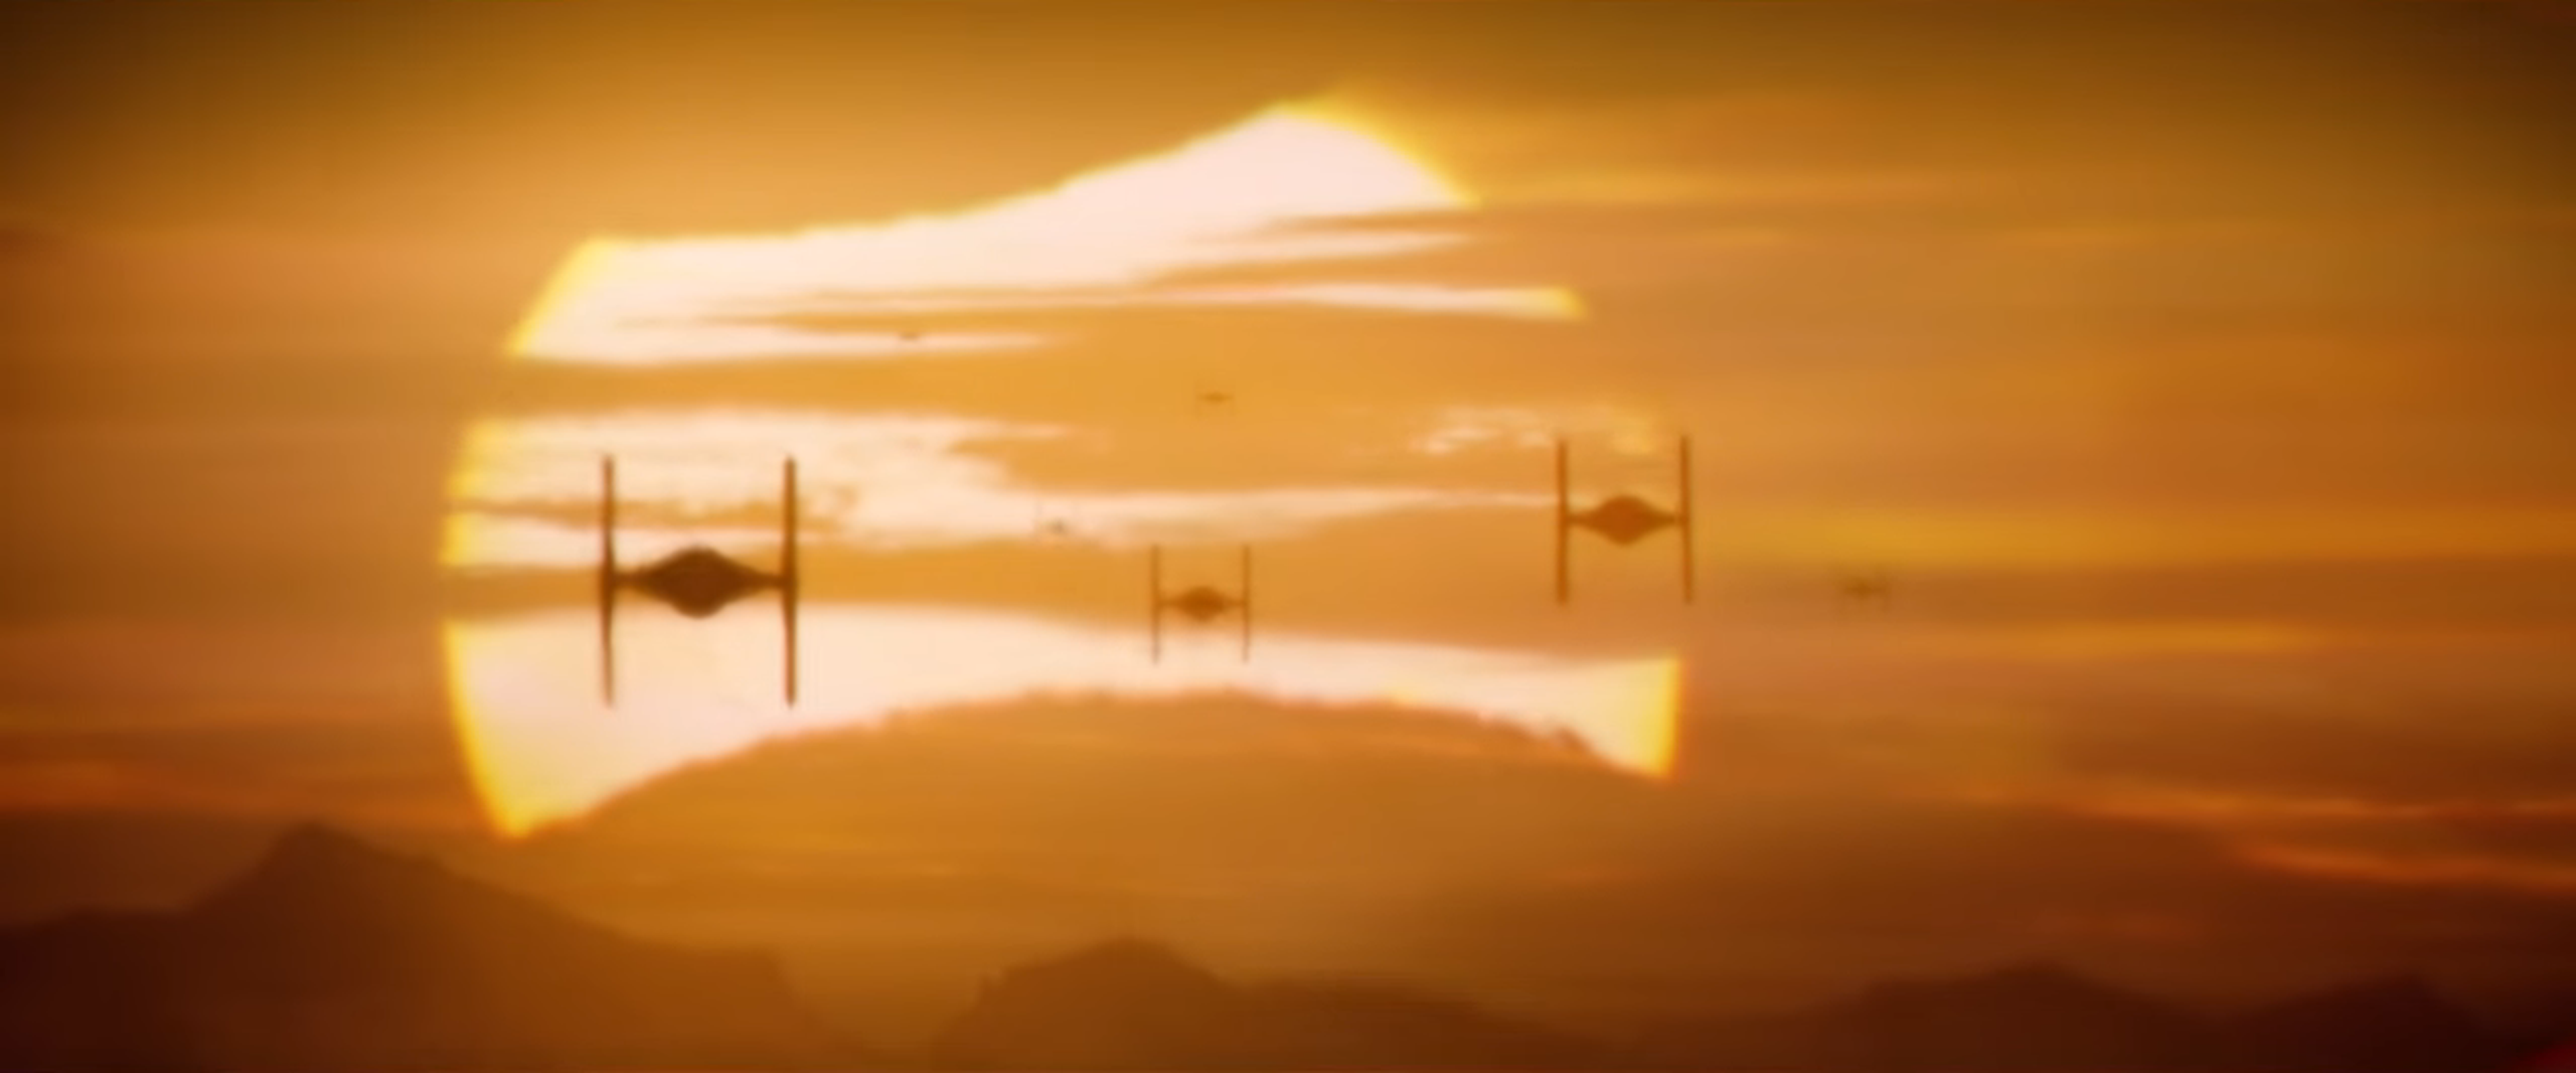 Star Wars Episodio VII: Claves del trailer japonés